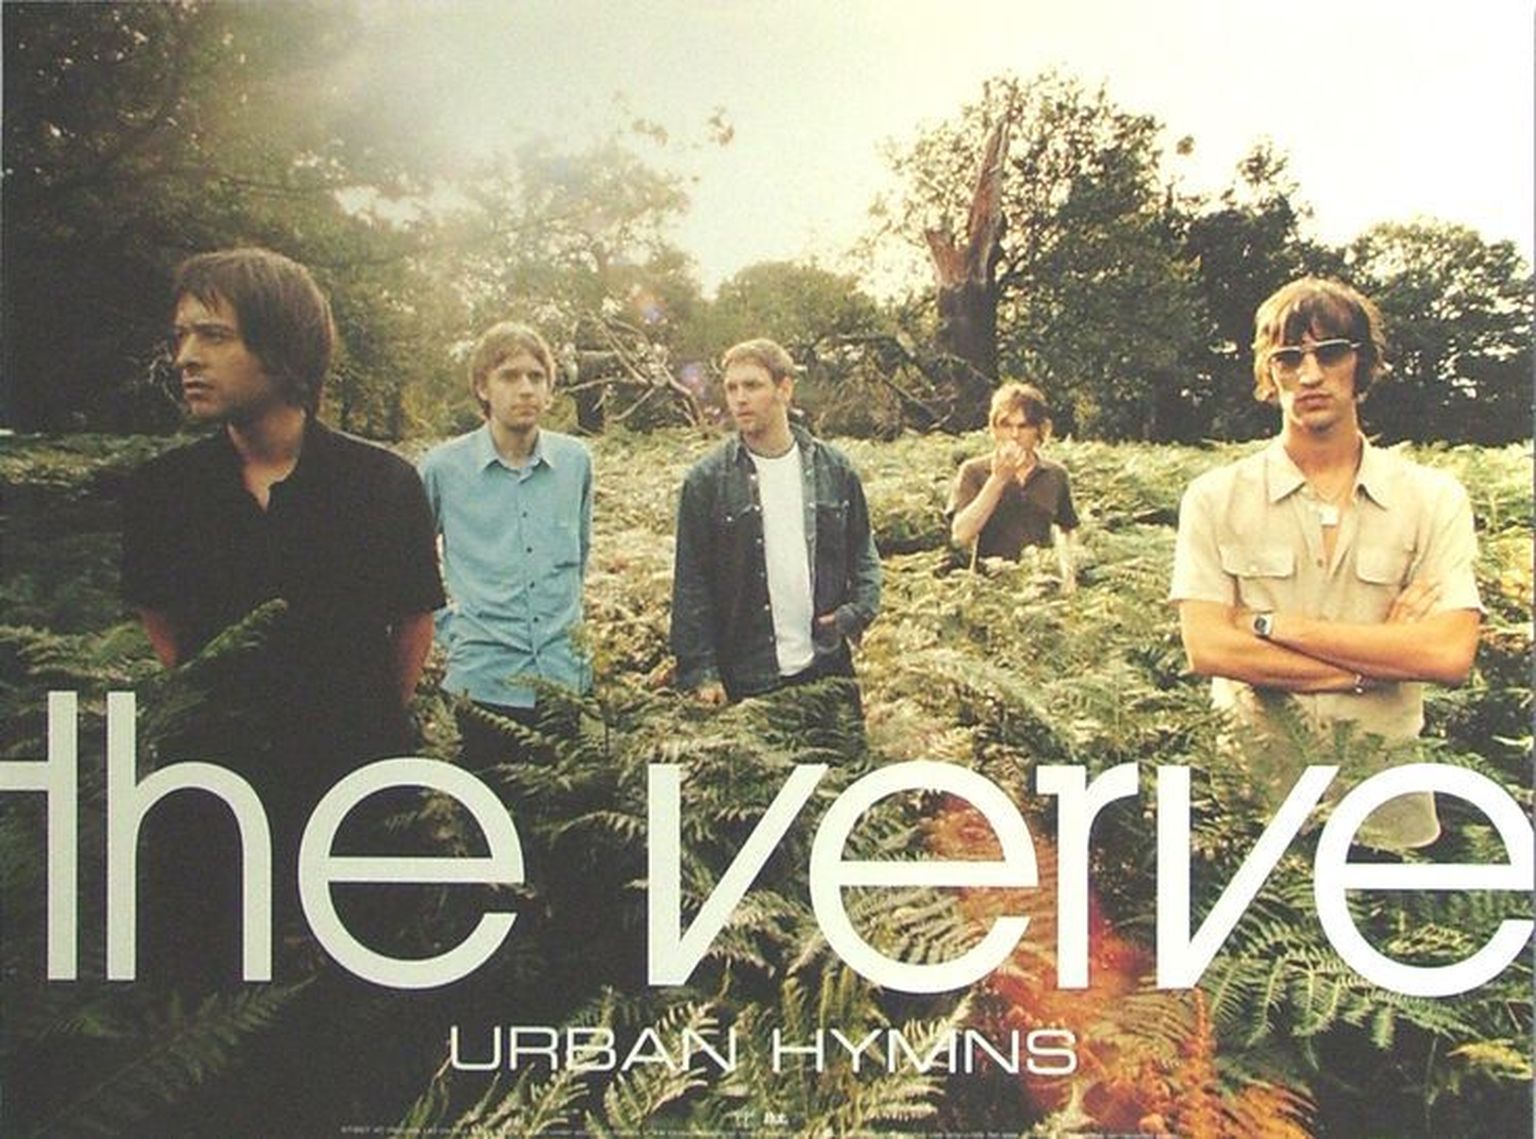 The Verve, Urban Hymns